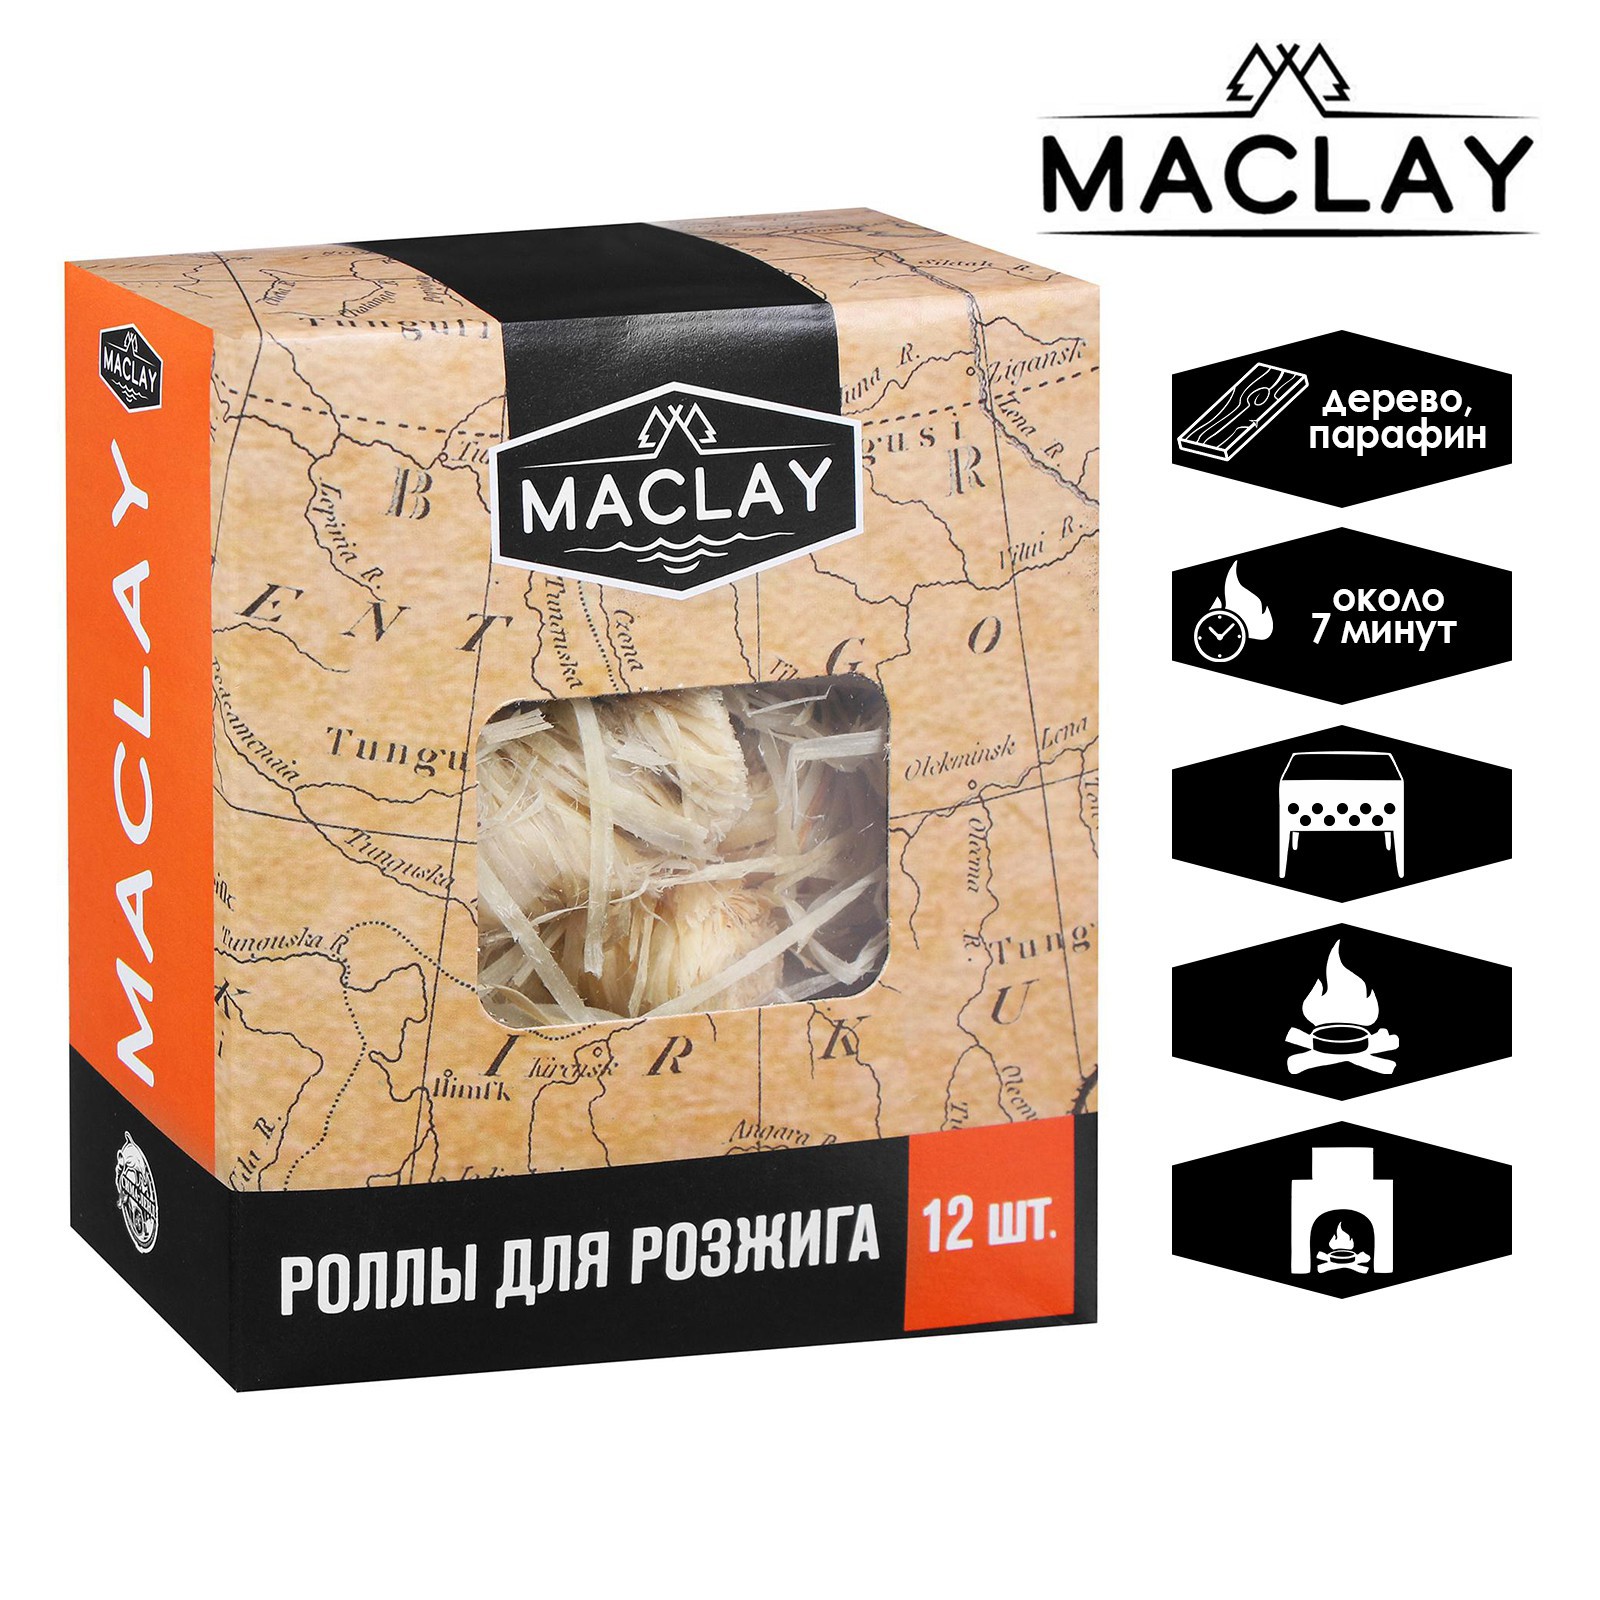  для розжига Maclay 5073020 12 шт по цене 159 ₽/шт.  в .